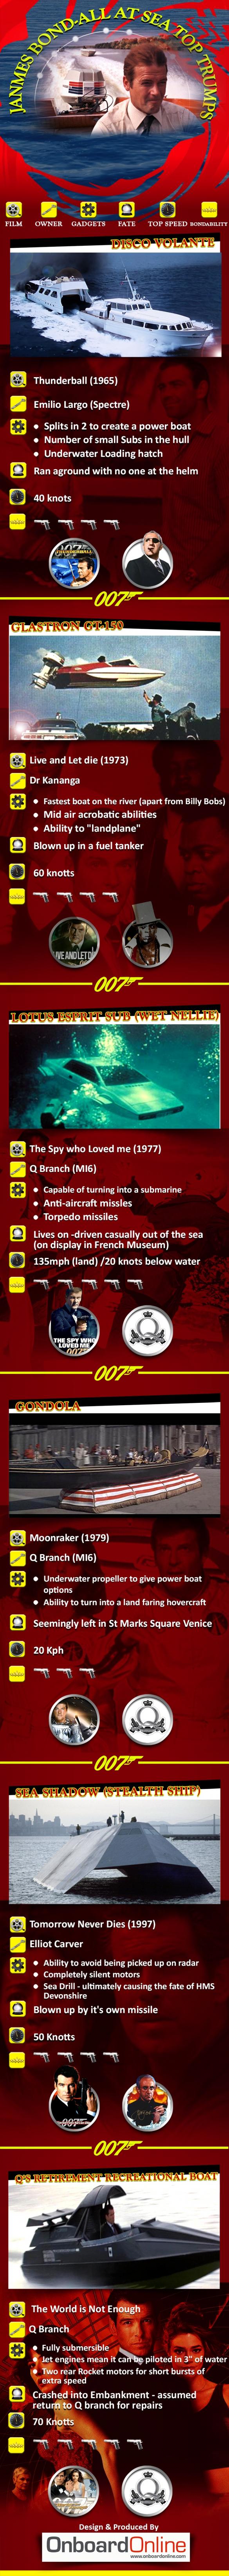 James Bond Top Trumps Infographic